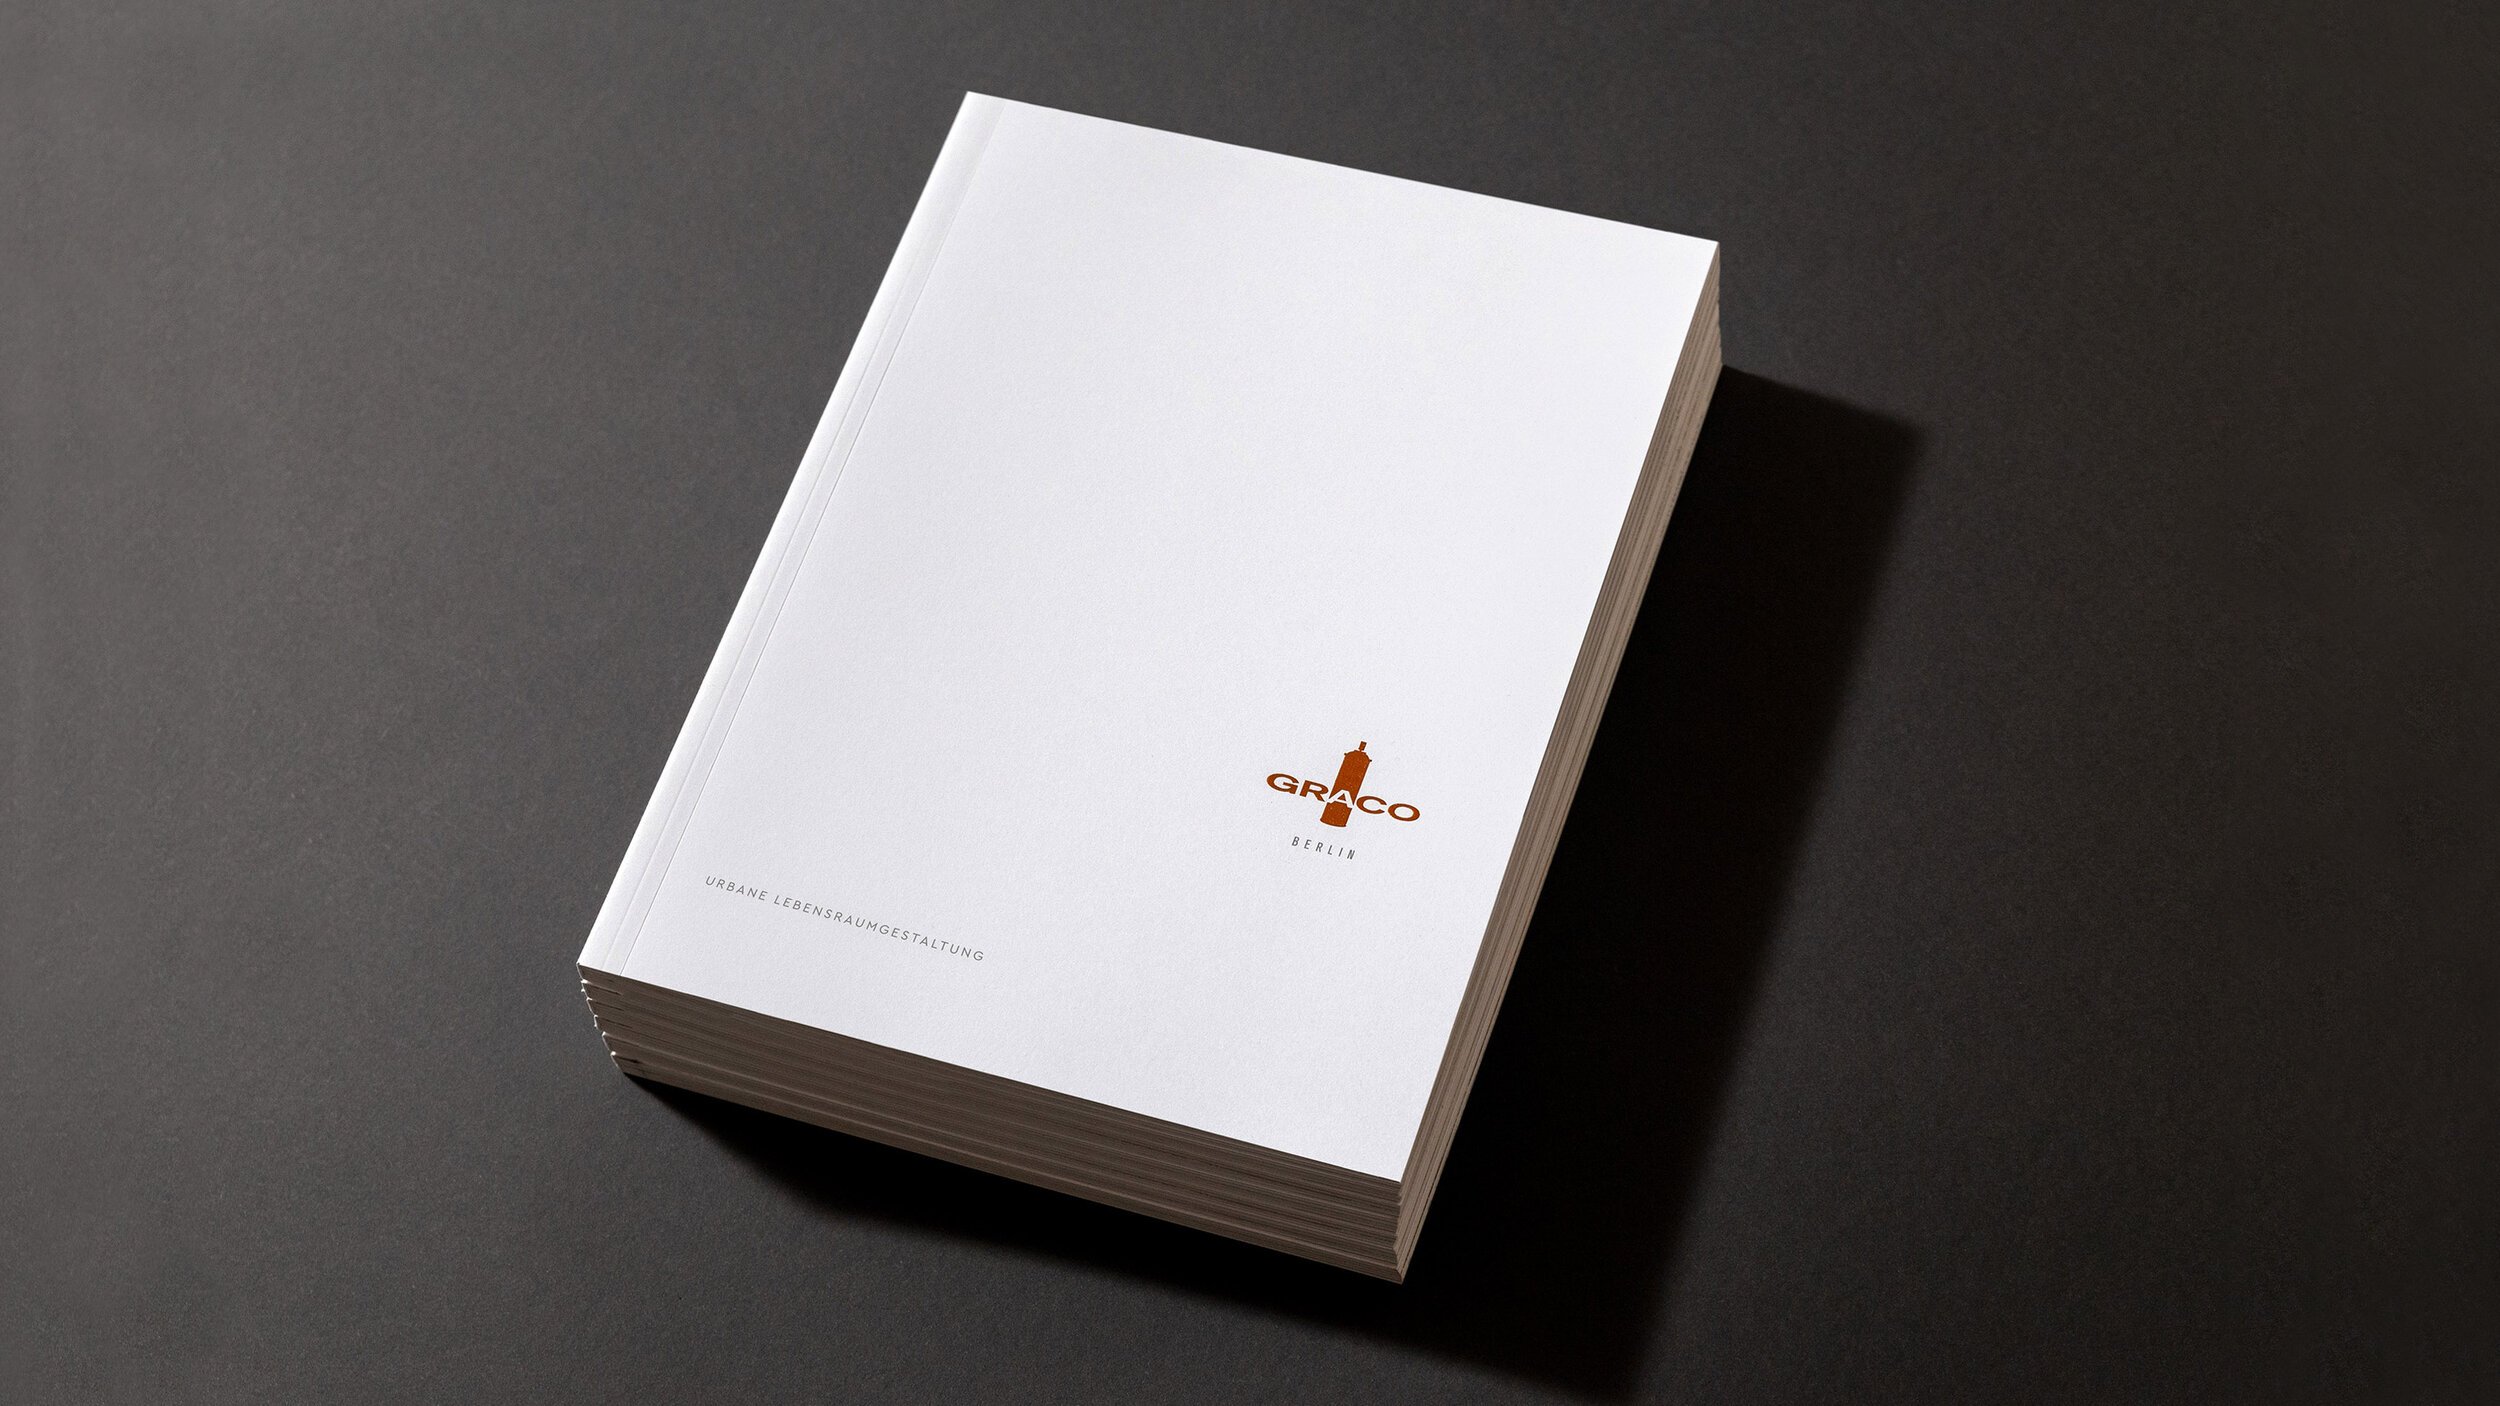 GRACO-Urban-Broschuere-Booklet-Cover-1.jpeg